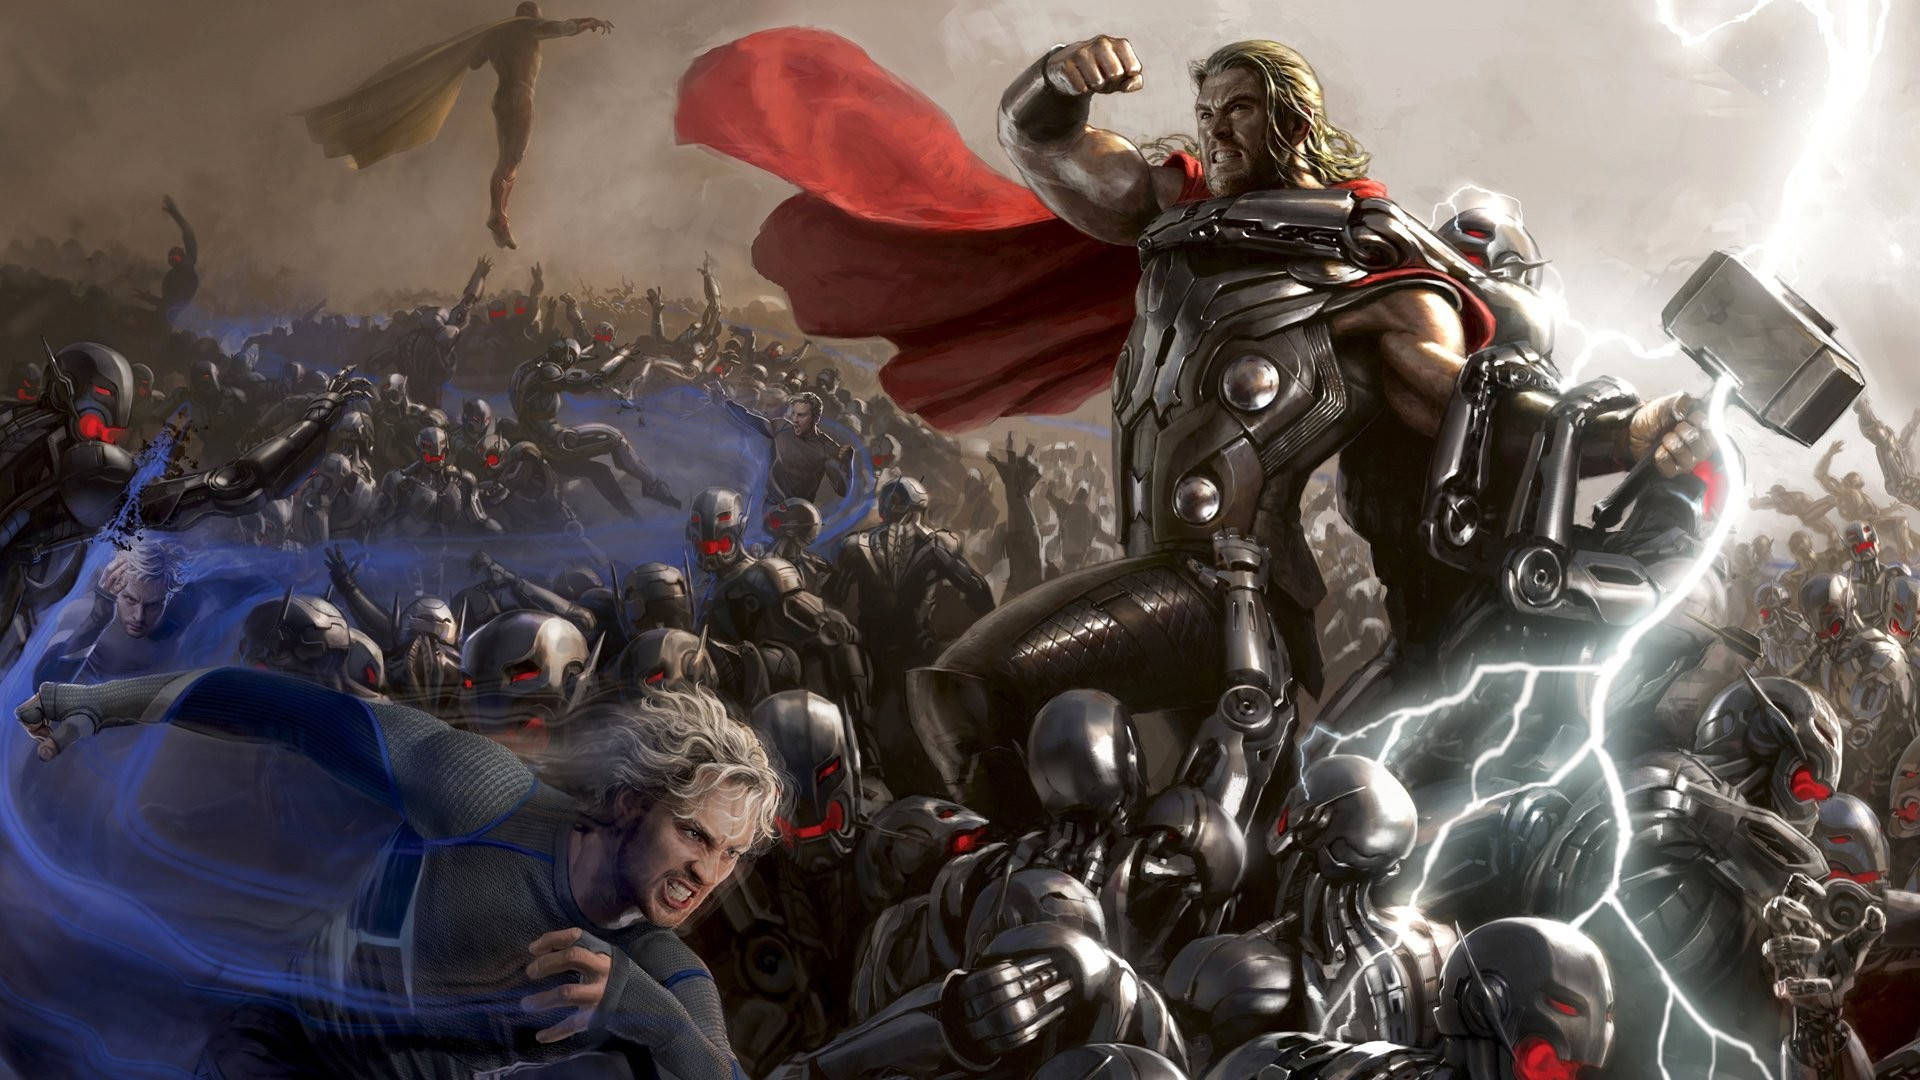 Thor Against The Devilish Ultron Wallpaper